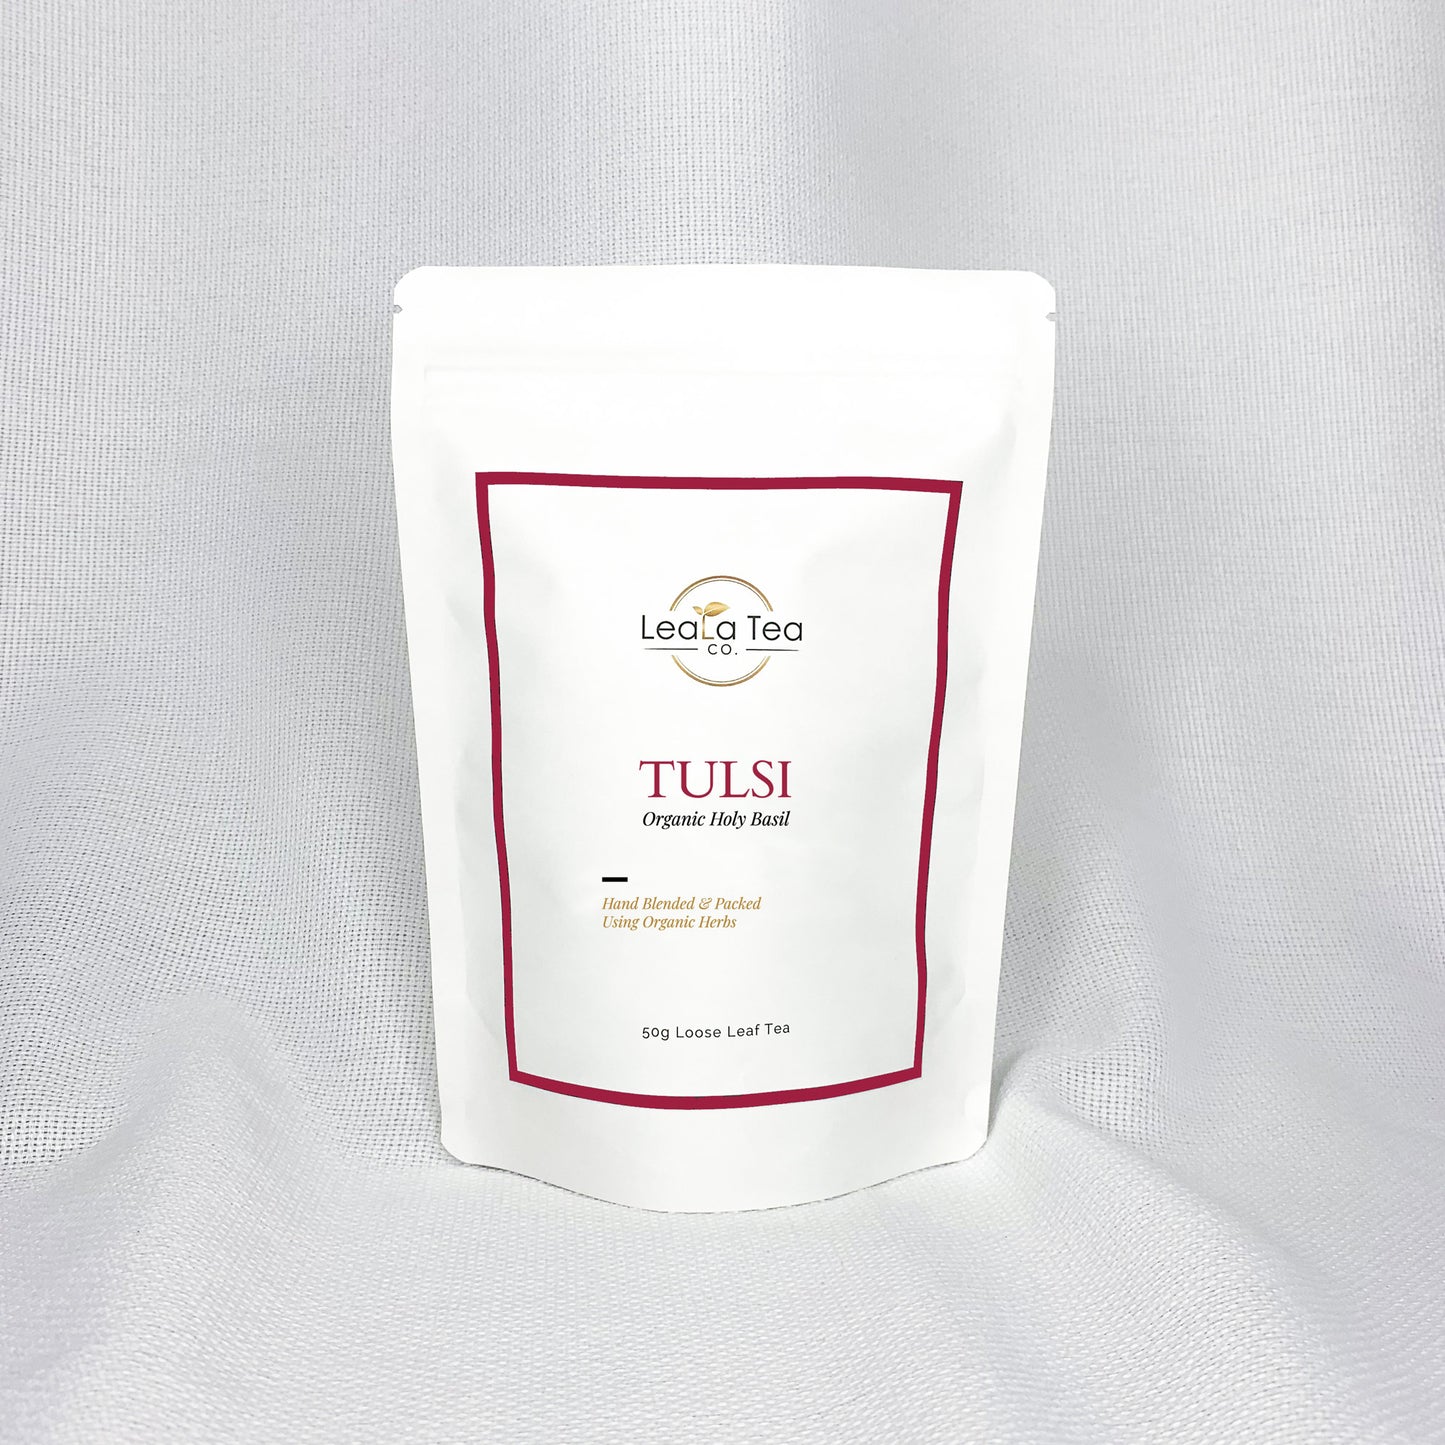 Tulsi | Organic Holy Basil